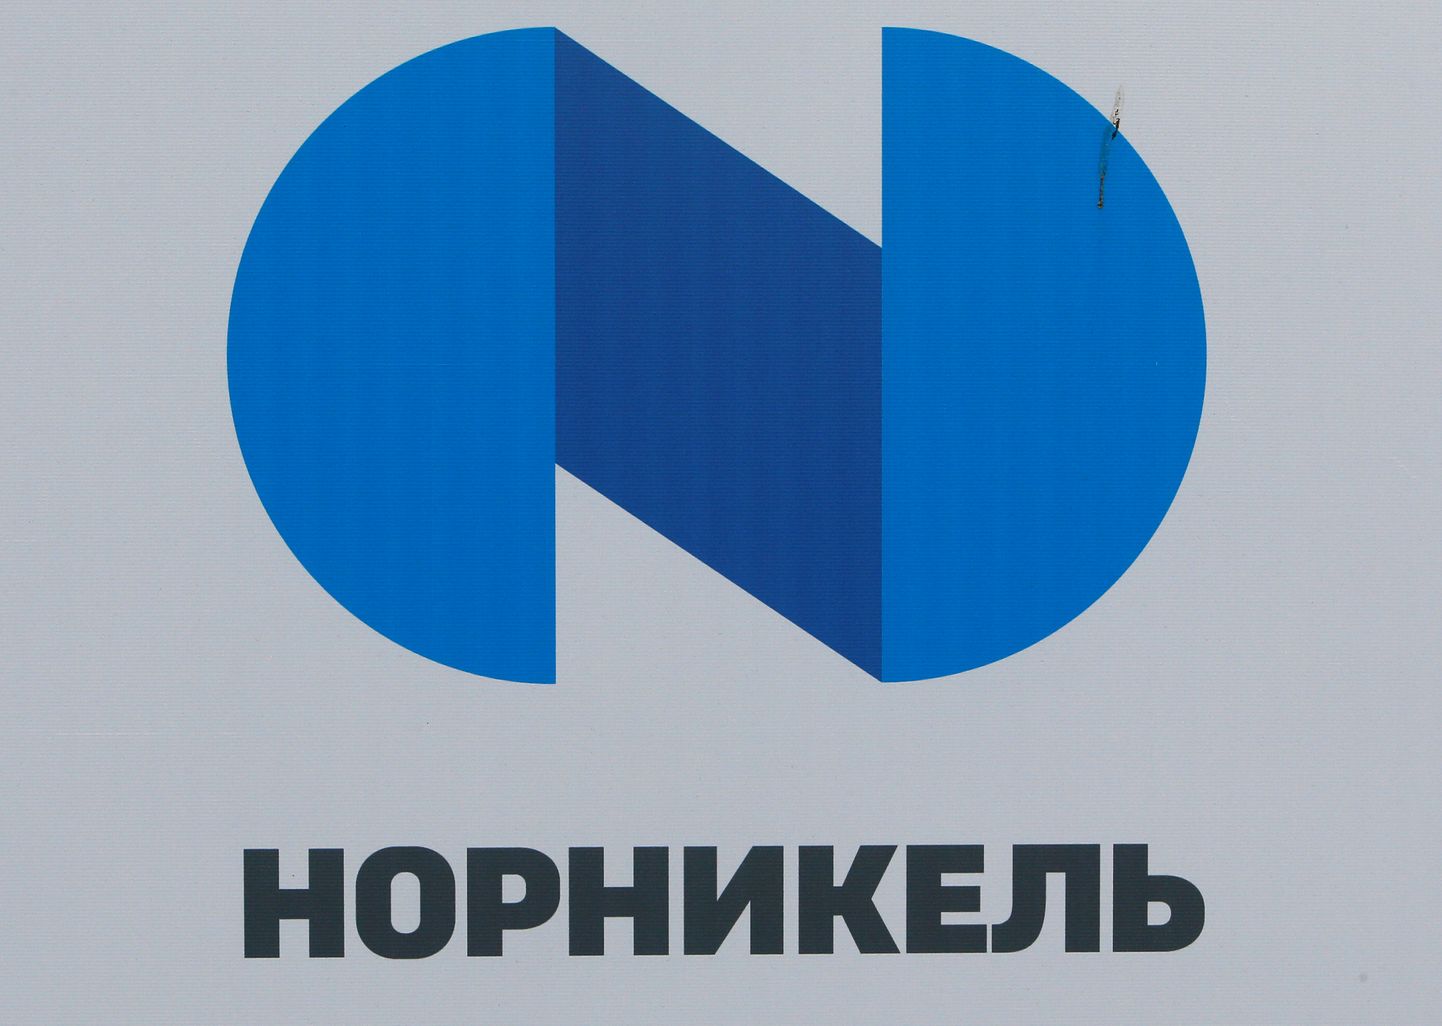 Vene kaevandusfirma Norilsk Nickel (Nornickel) logo.